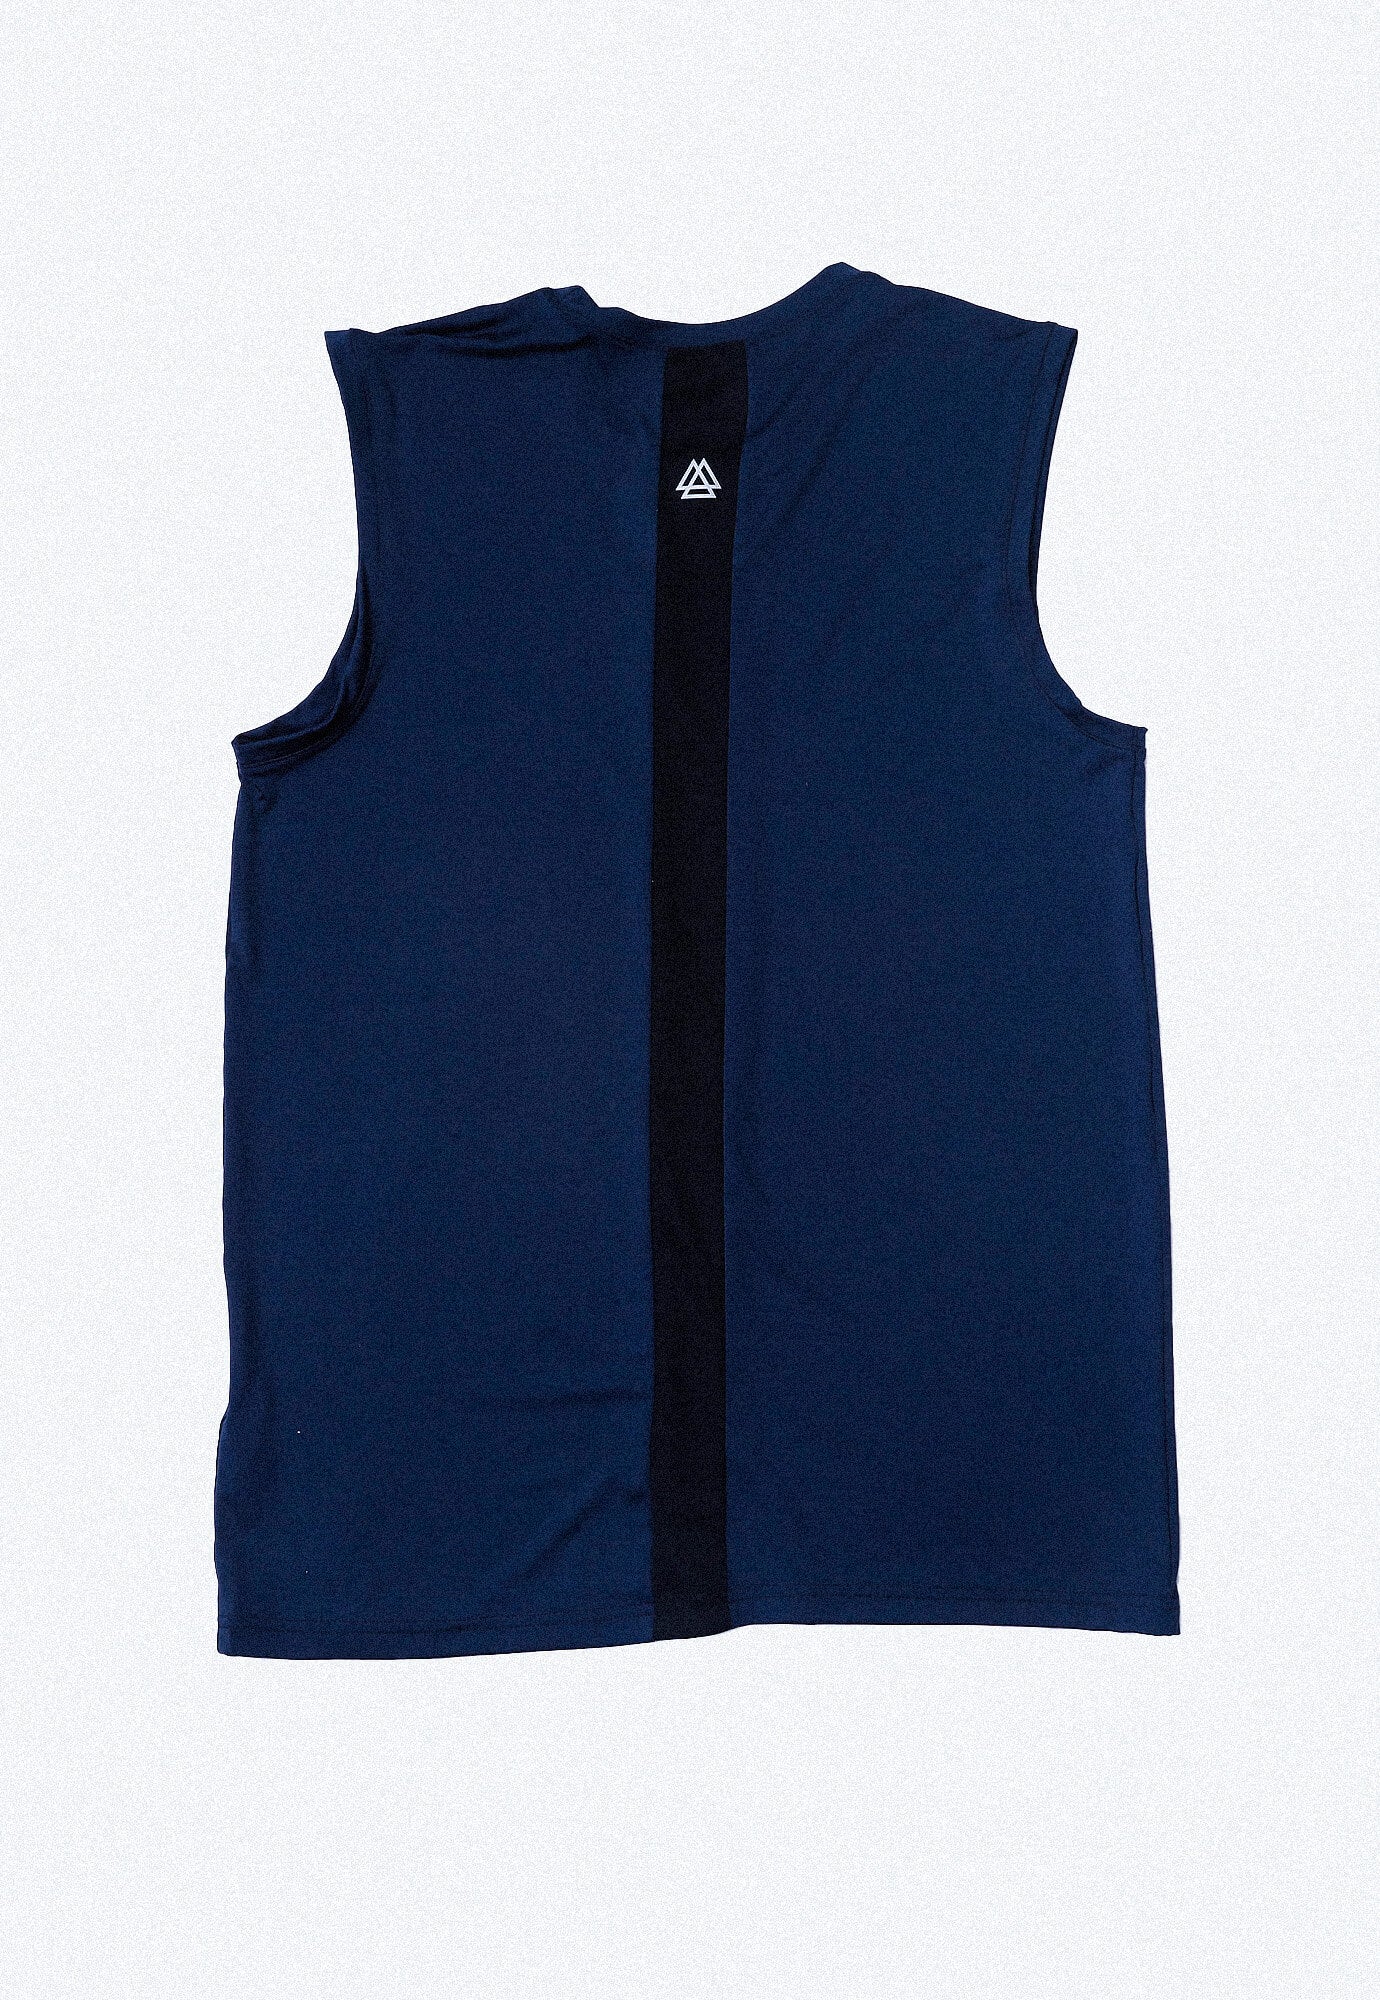 Camisilla deportiva azul oscuro manga sisa, bloque en espalda vertical, transfer reflectivo en frente y en bloque para hombre